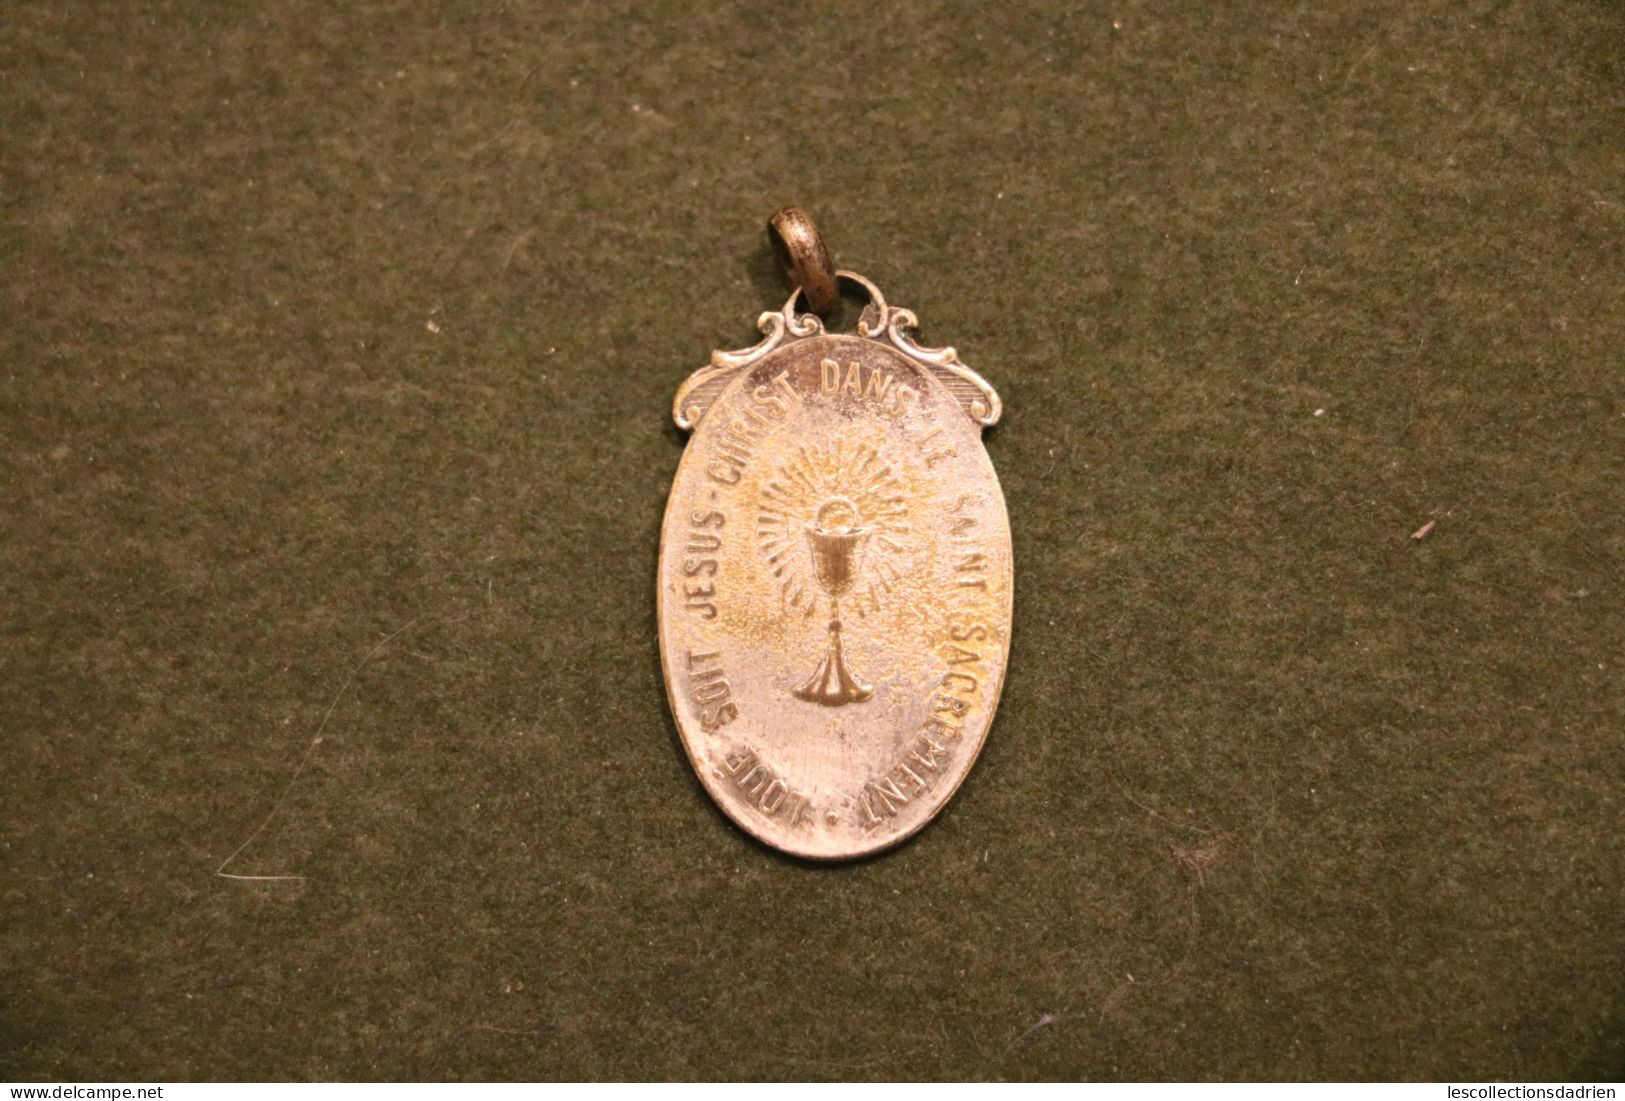 Médaille religieuse - Sainte Julienne de Cornillon - religious holy medal